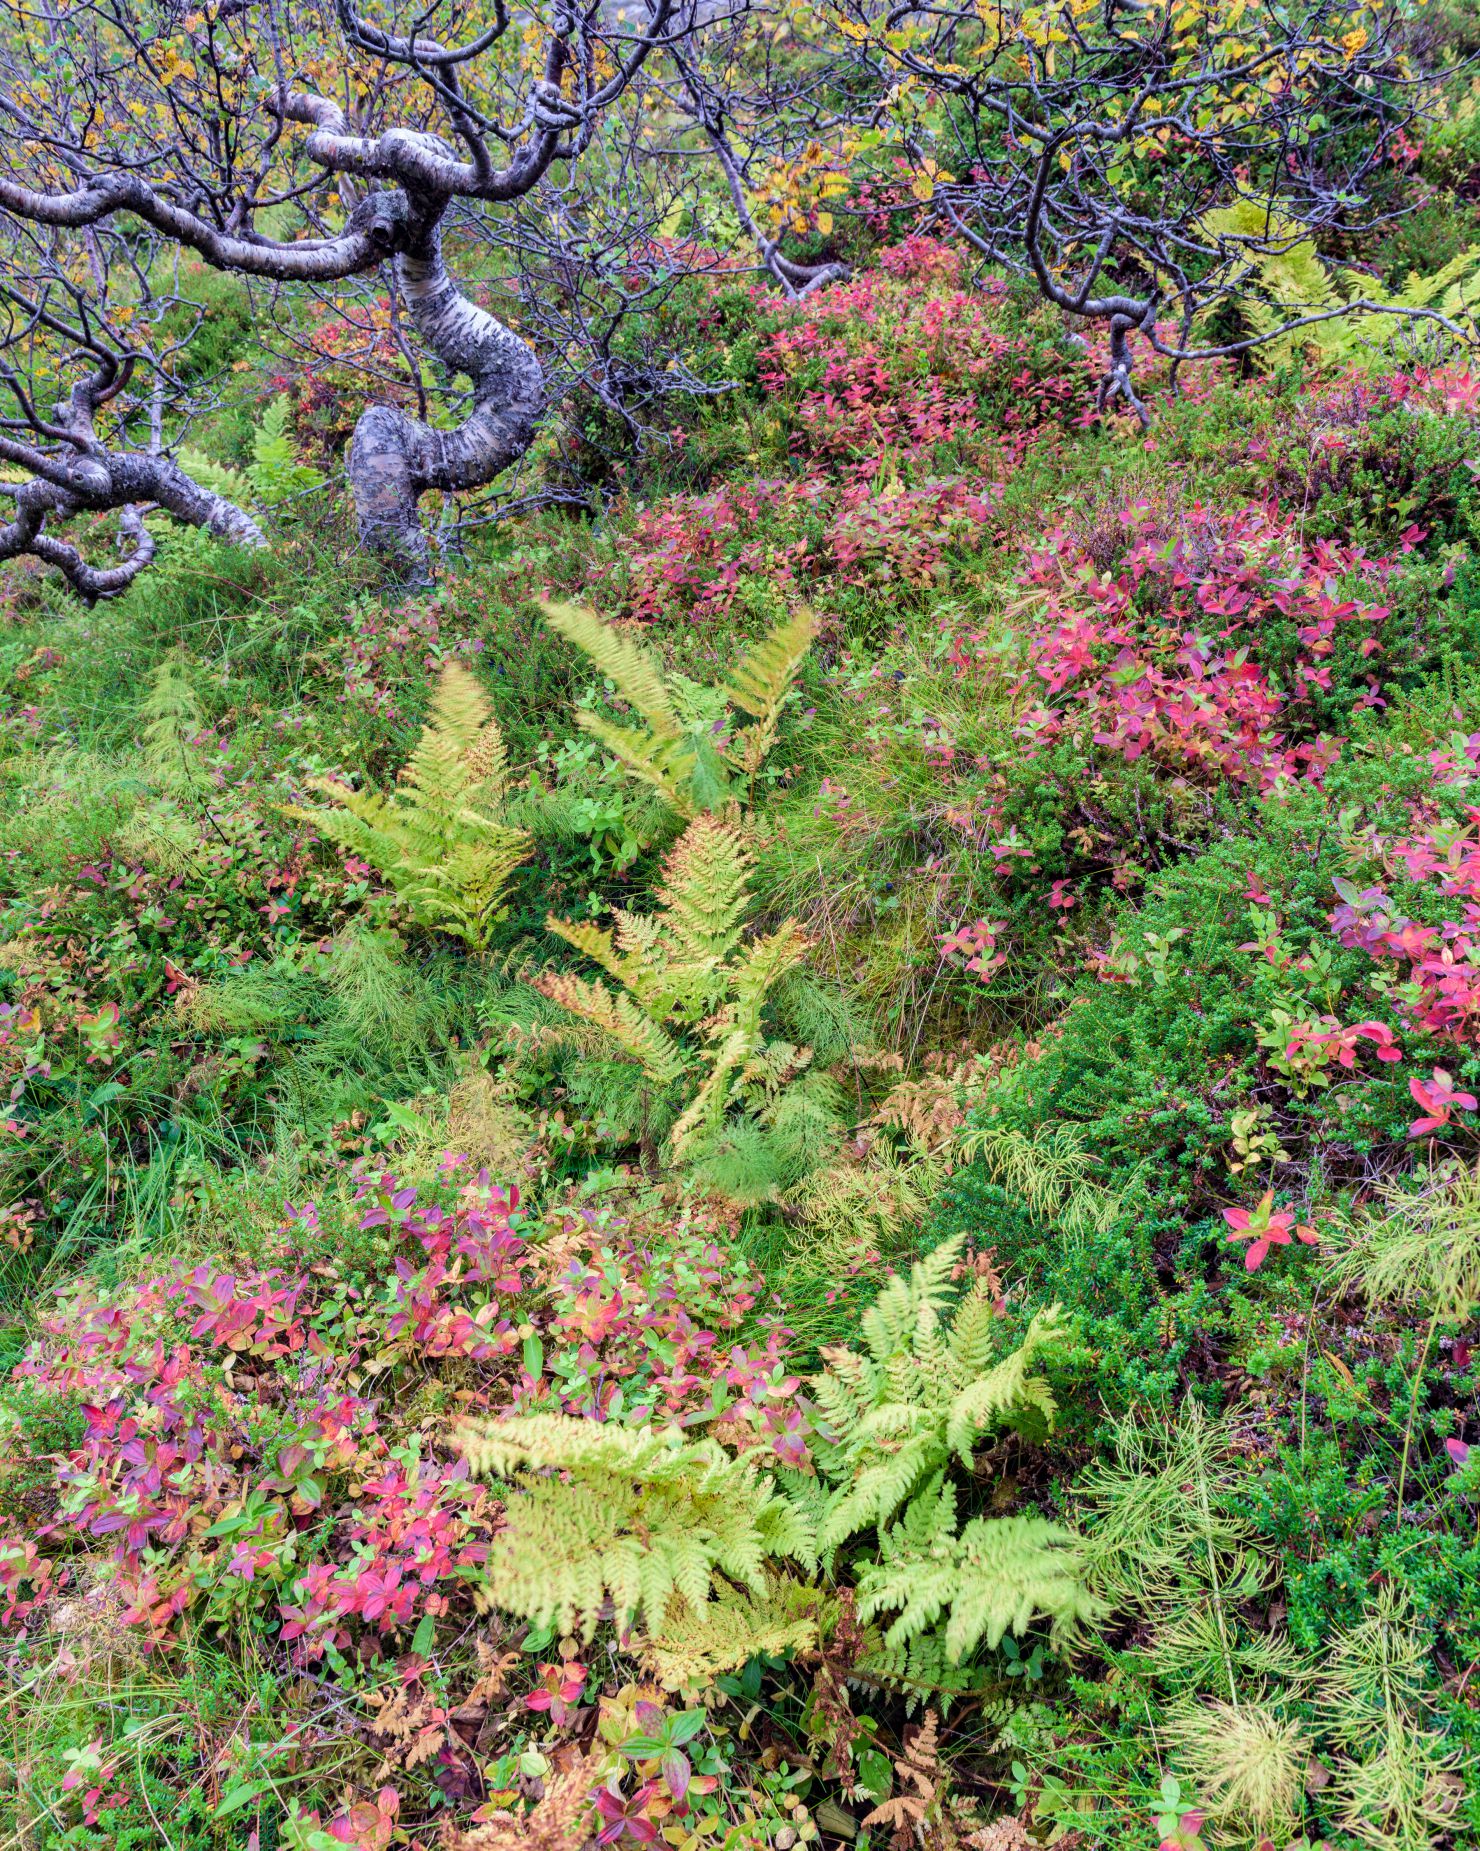 Colourful tundra vegetation